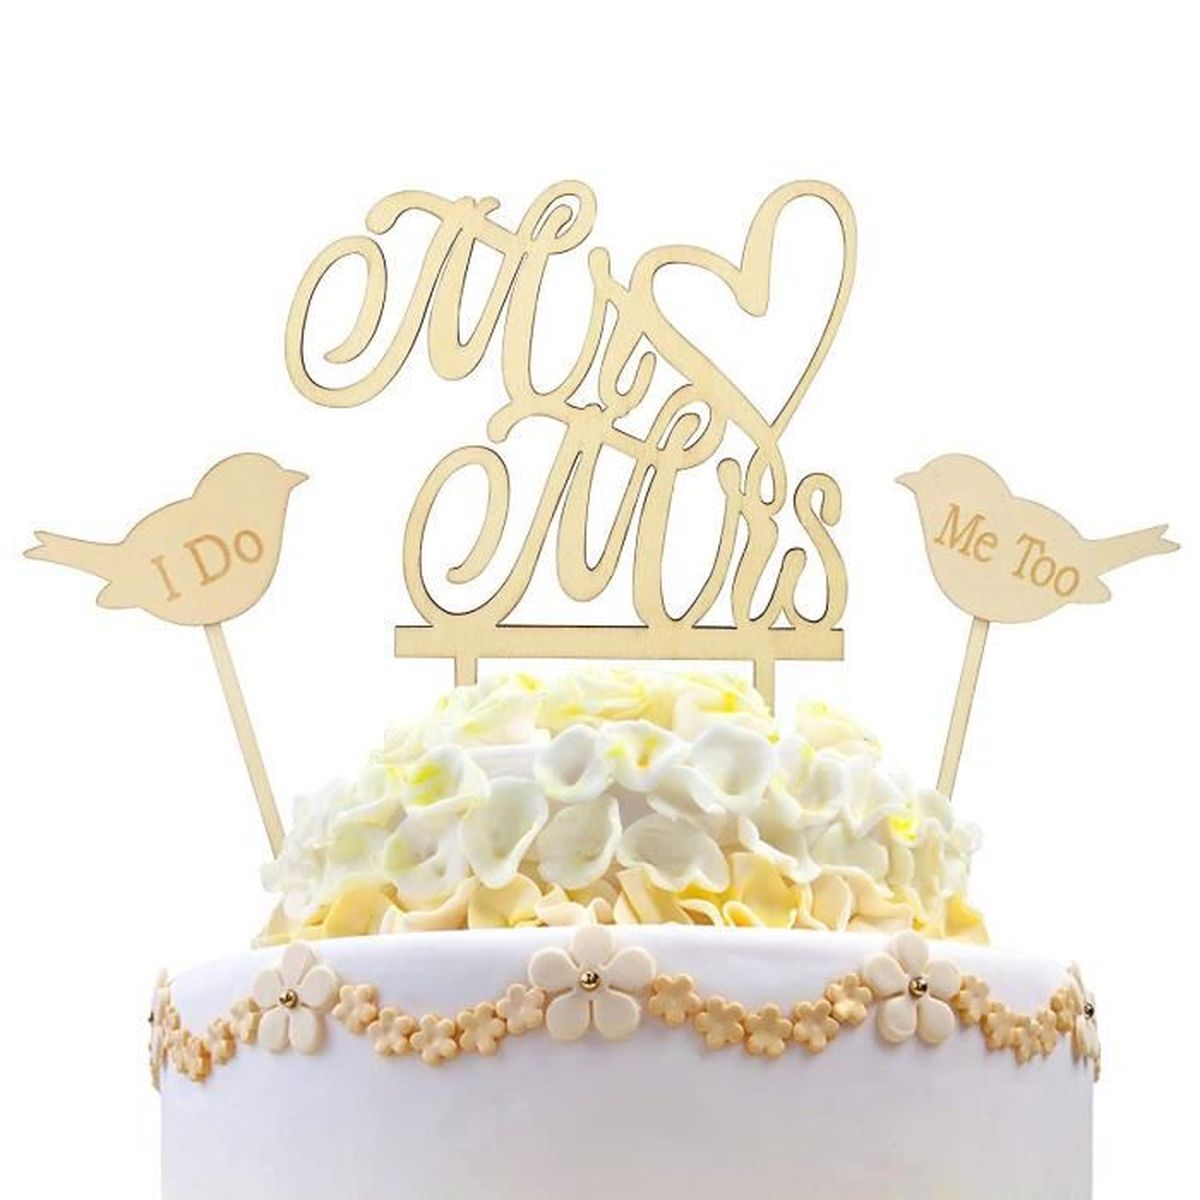 Superbe Cristal 15-90th cake topper mariage anniversaire décoration anniversaire